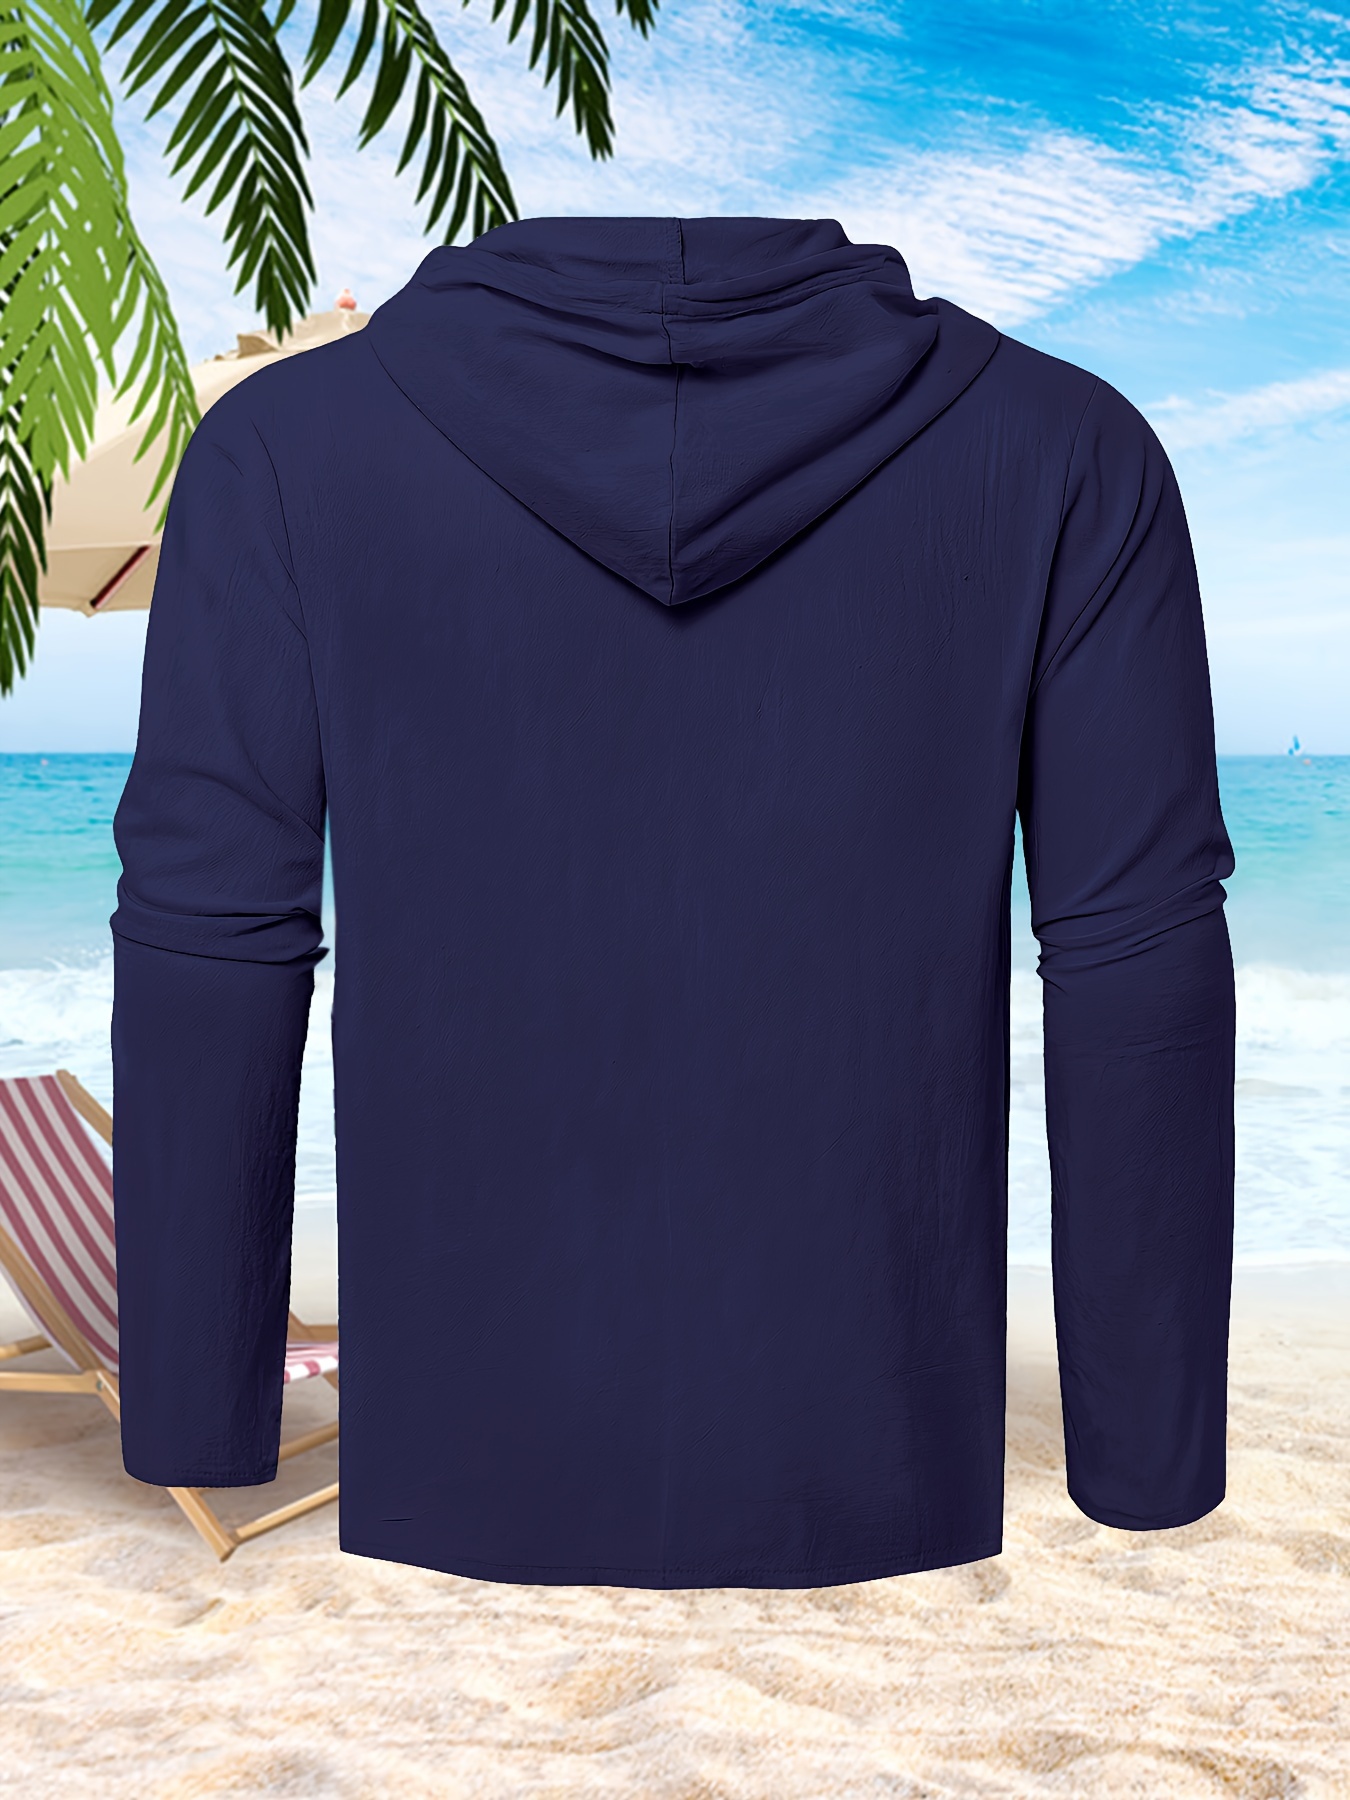 mens casual button up hooded shirt chic hoodie hawaiian shirt details 31